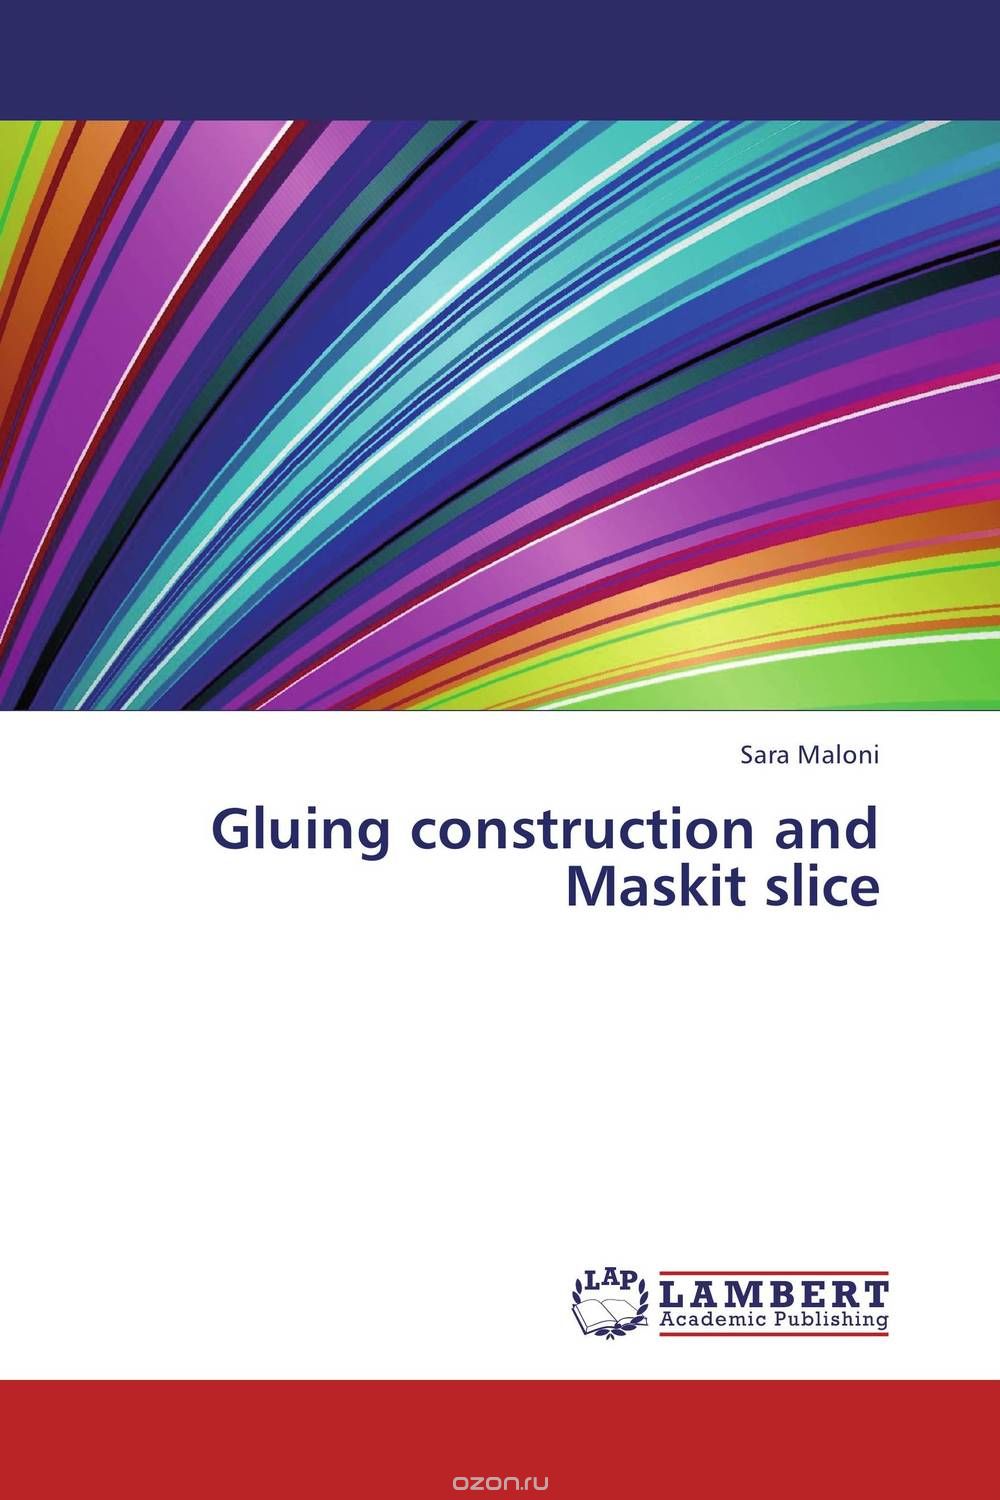 Скачать книгу "Gluing construction and Maskit slice"